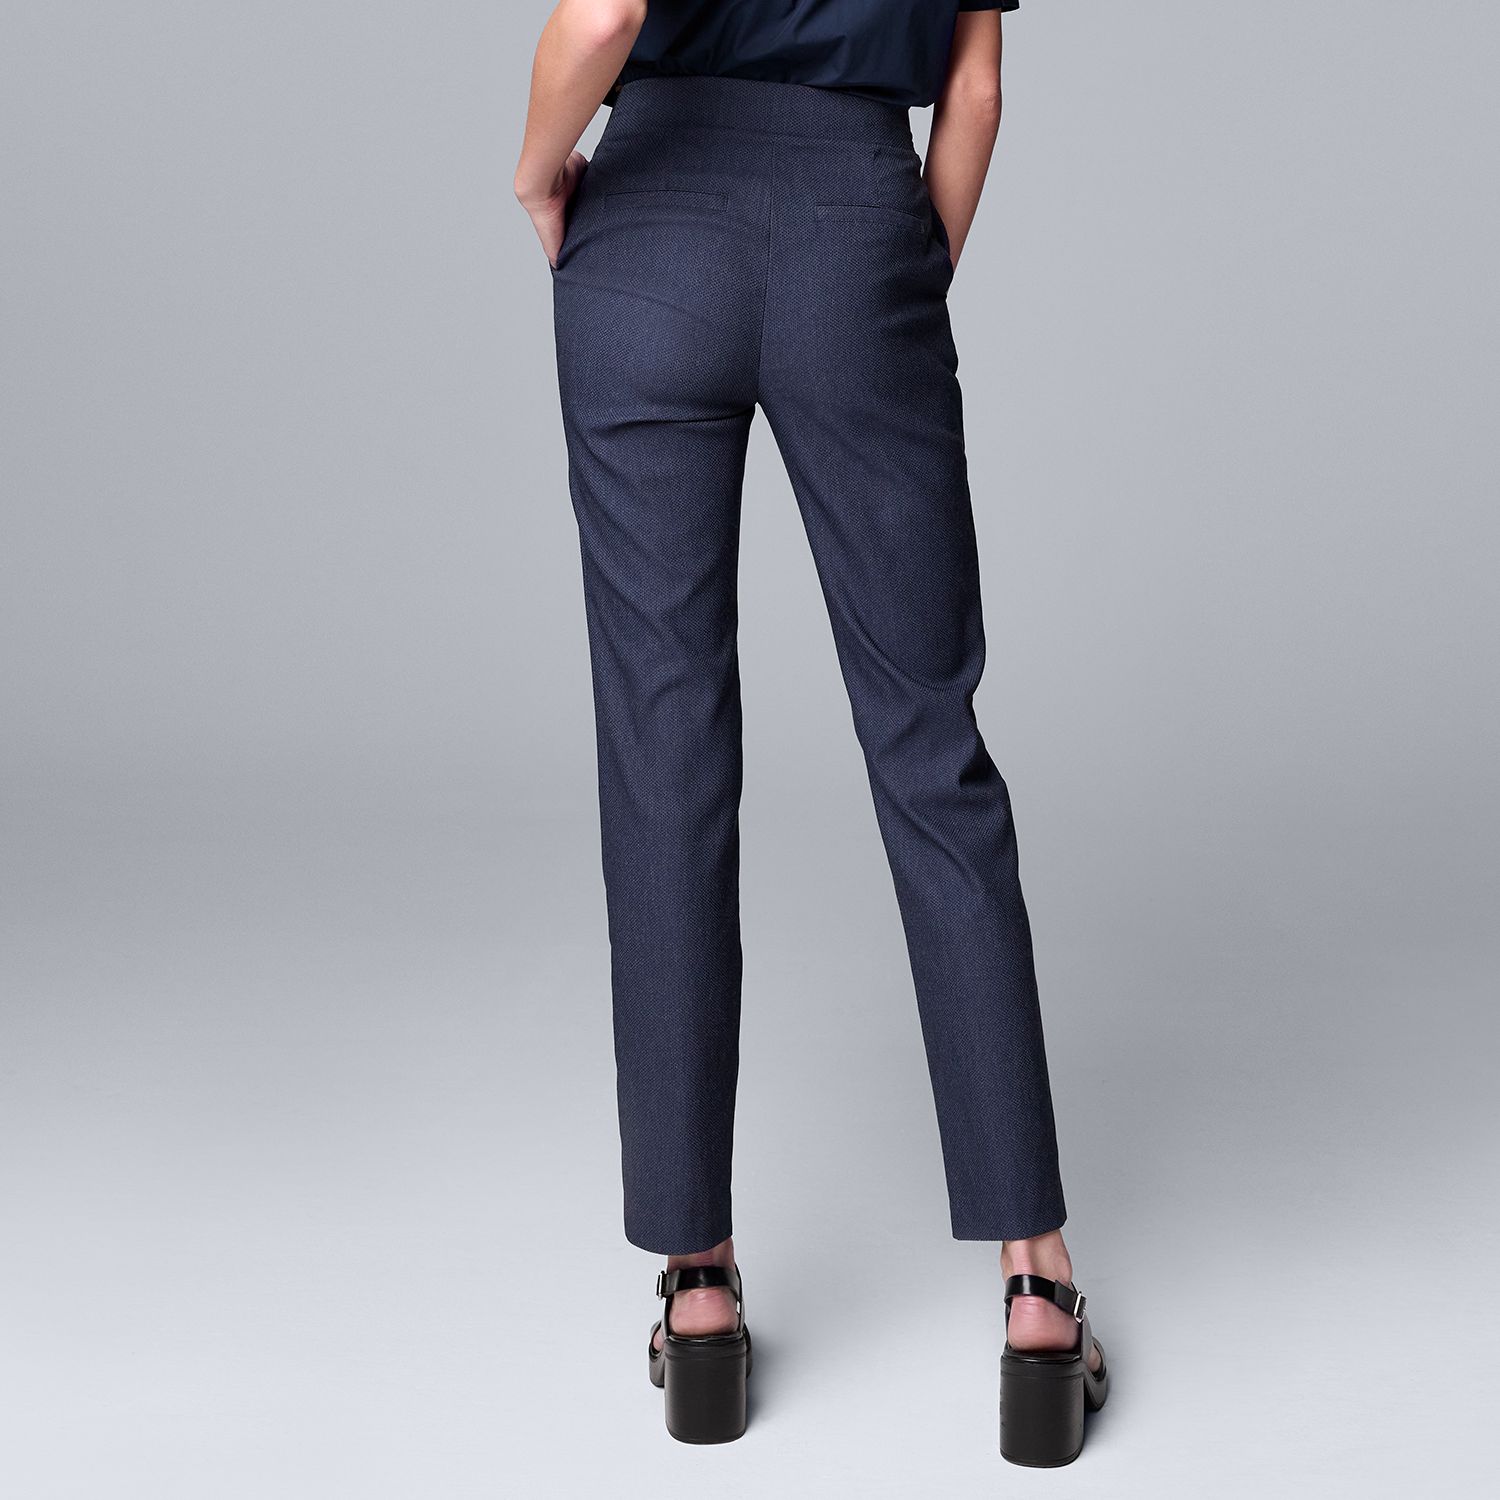 Vera Wang Simply Vera Skinny Ankle Pants Blue - $14 (74% Off